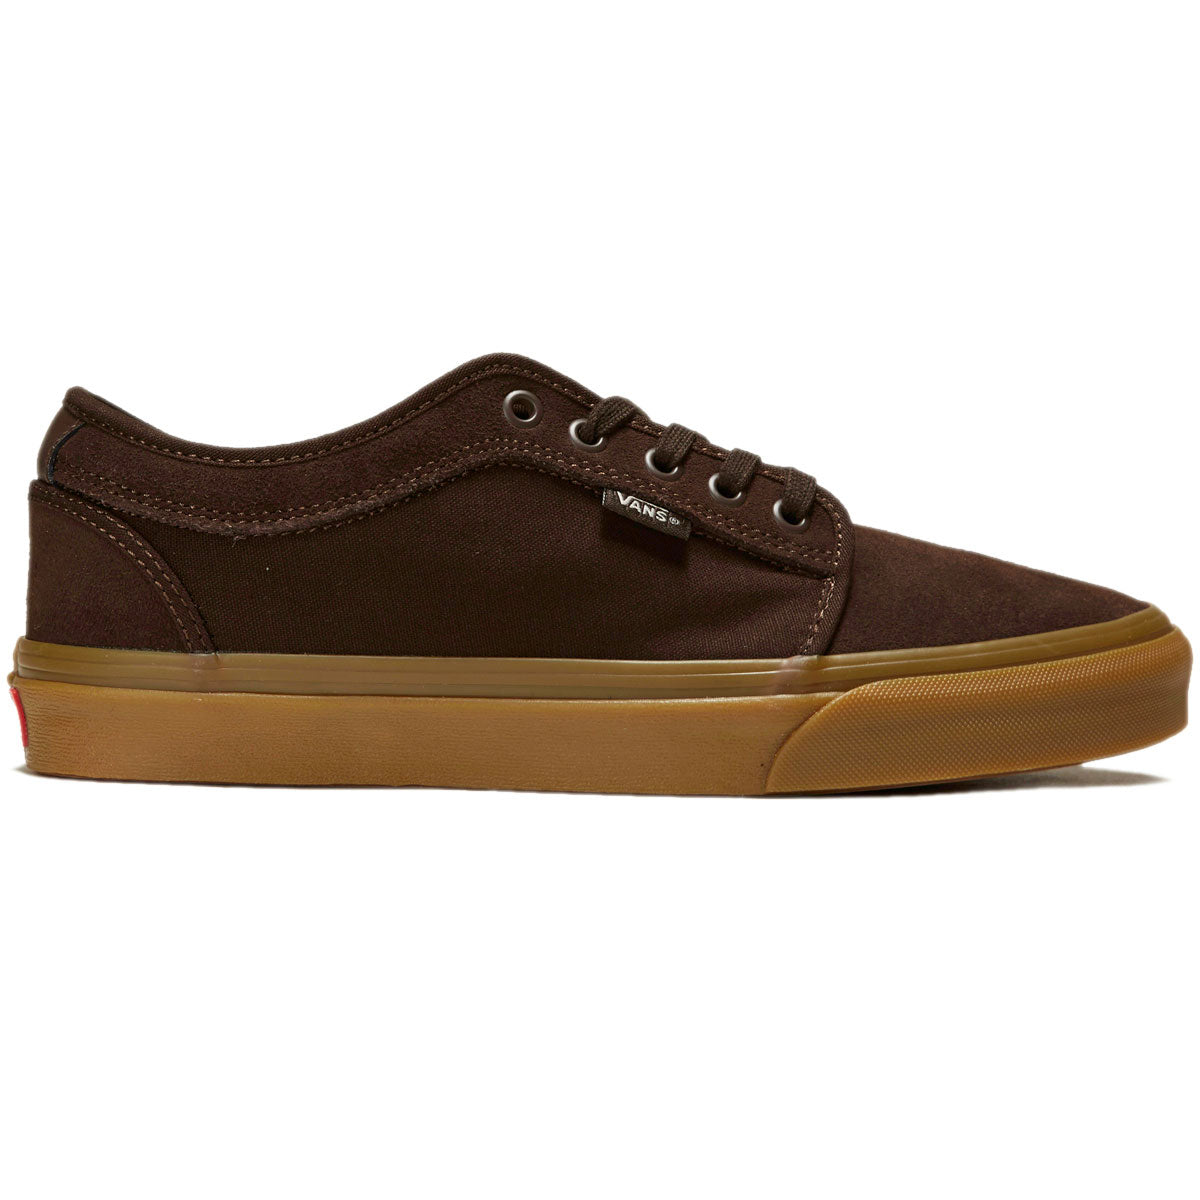 Vans Skate Chukka Low Shoes - Dark Brown/Gum image 1